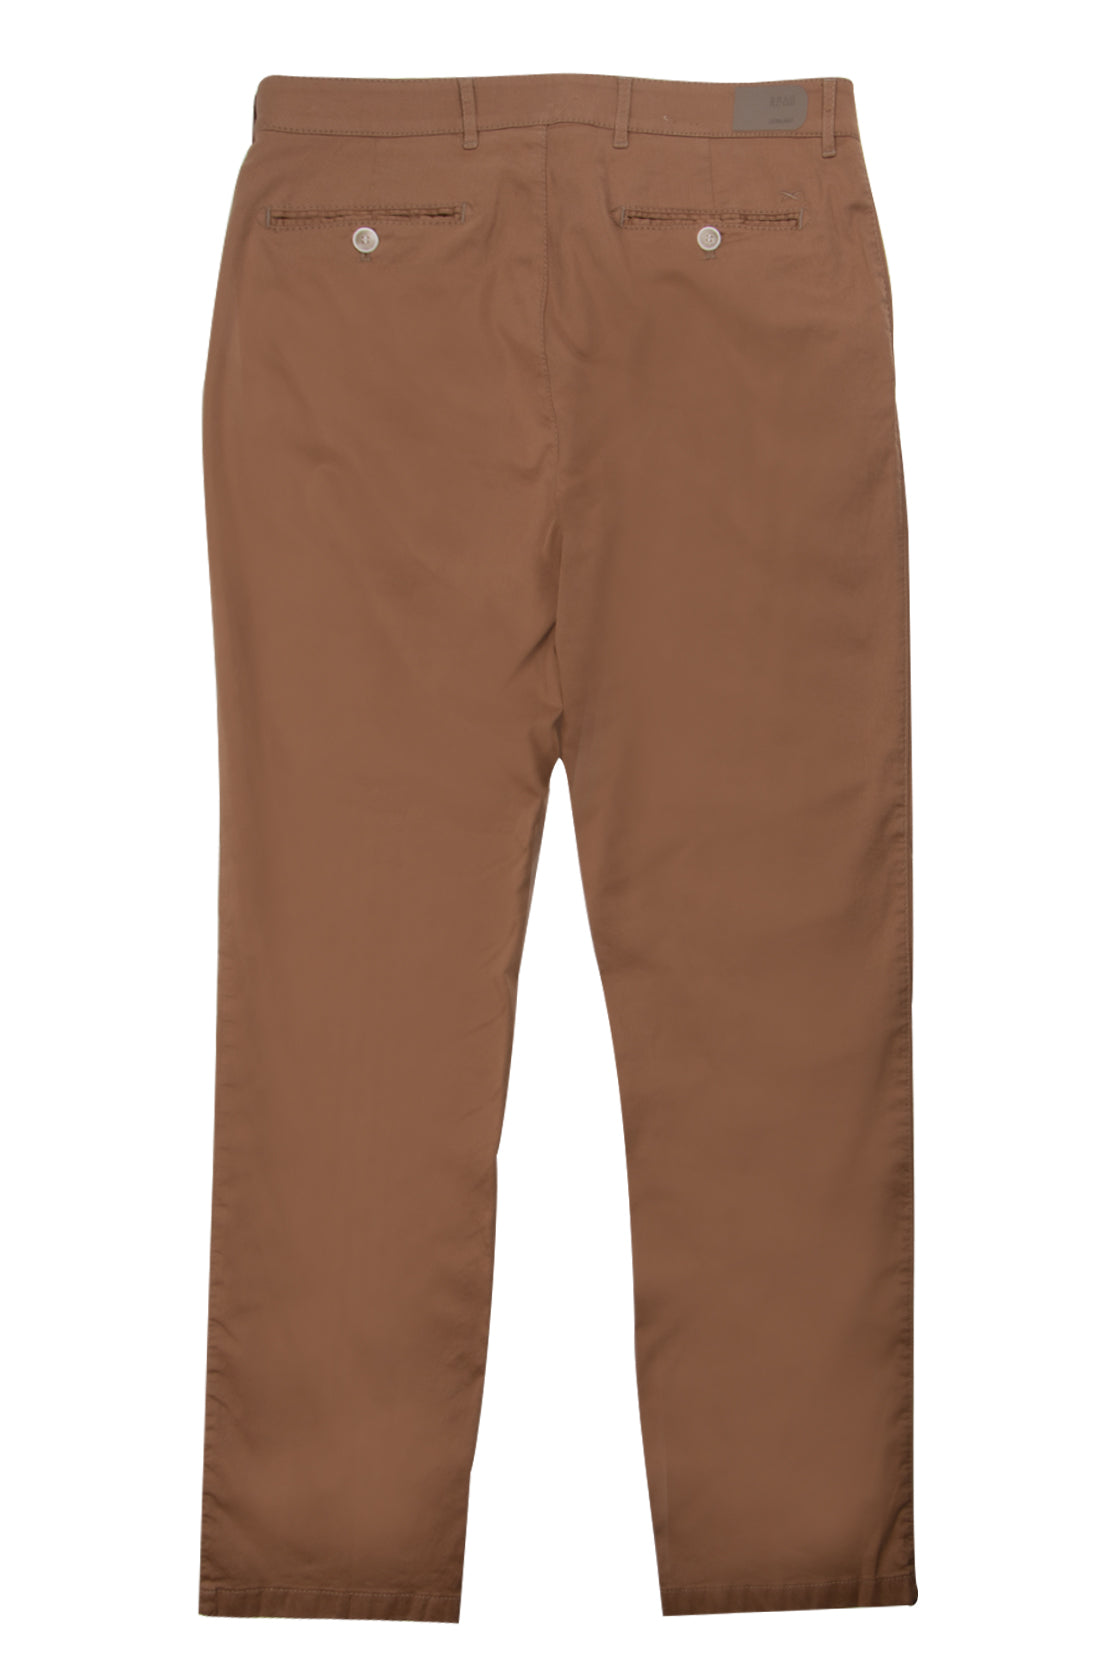 Brax Everest Cotton Trouser 32L Clay